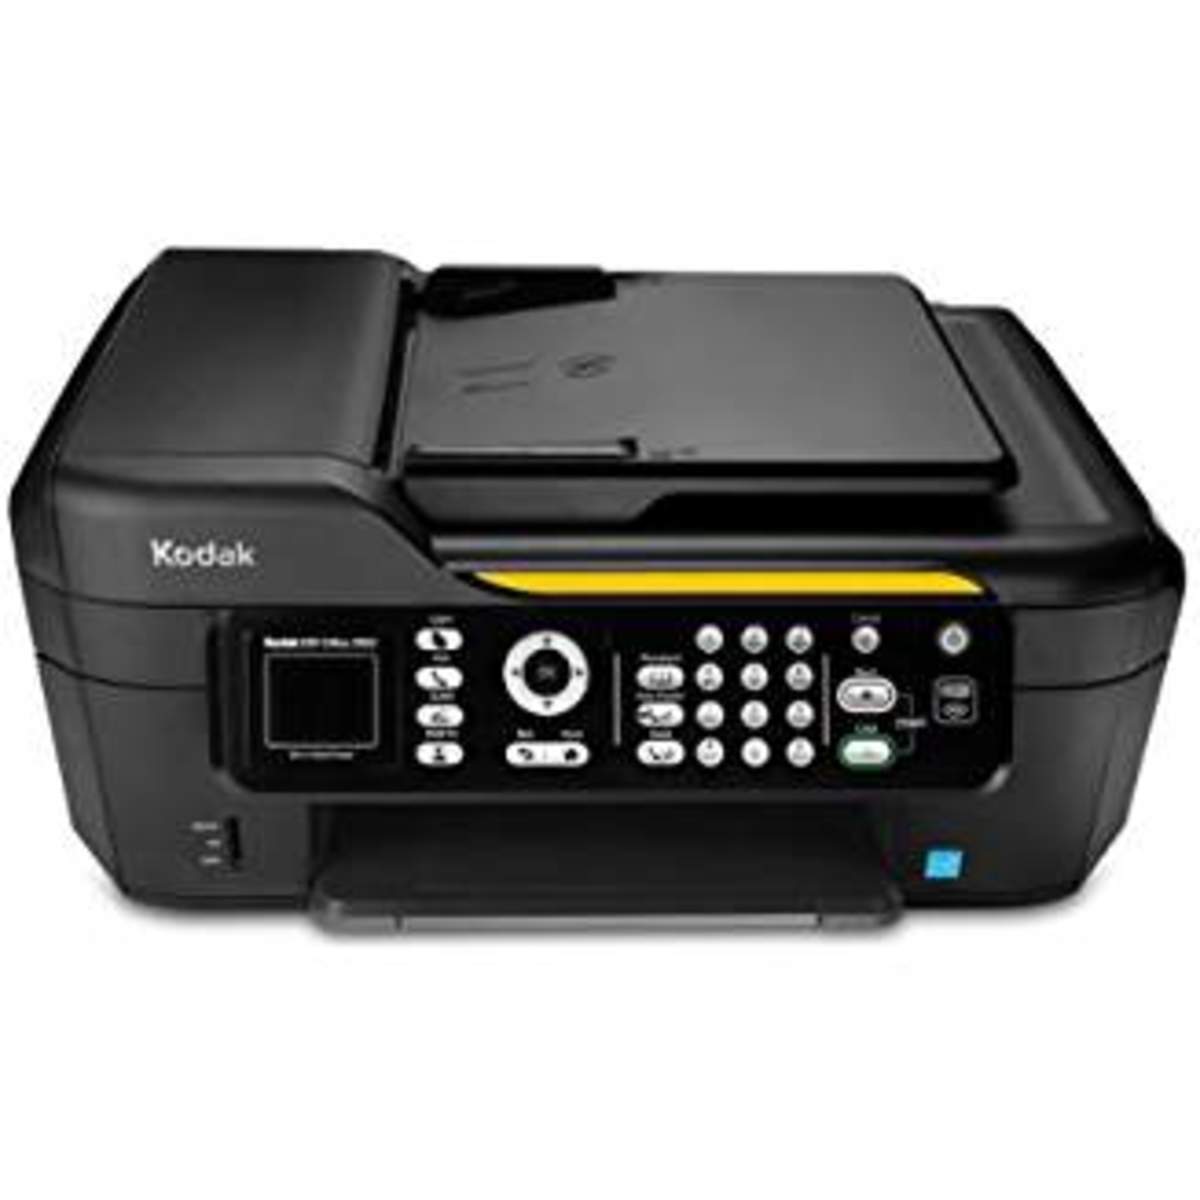 Kodak ESP Office 2150 Printer: Product and Customer Service Review